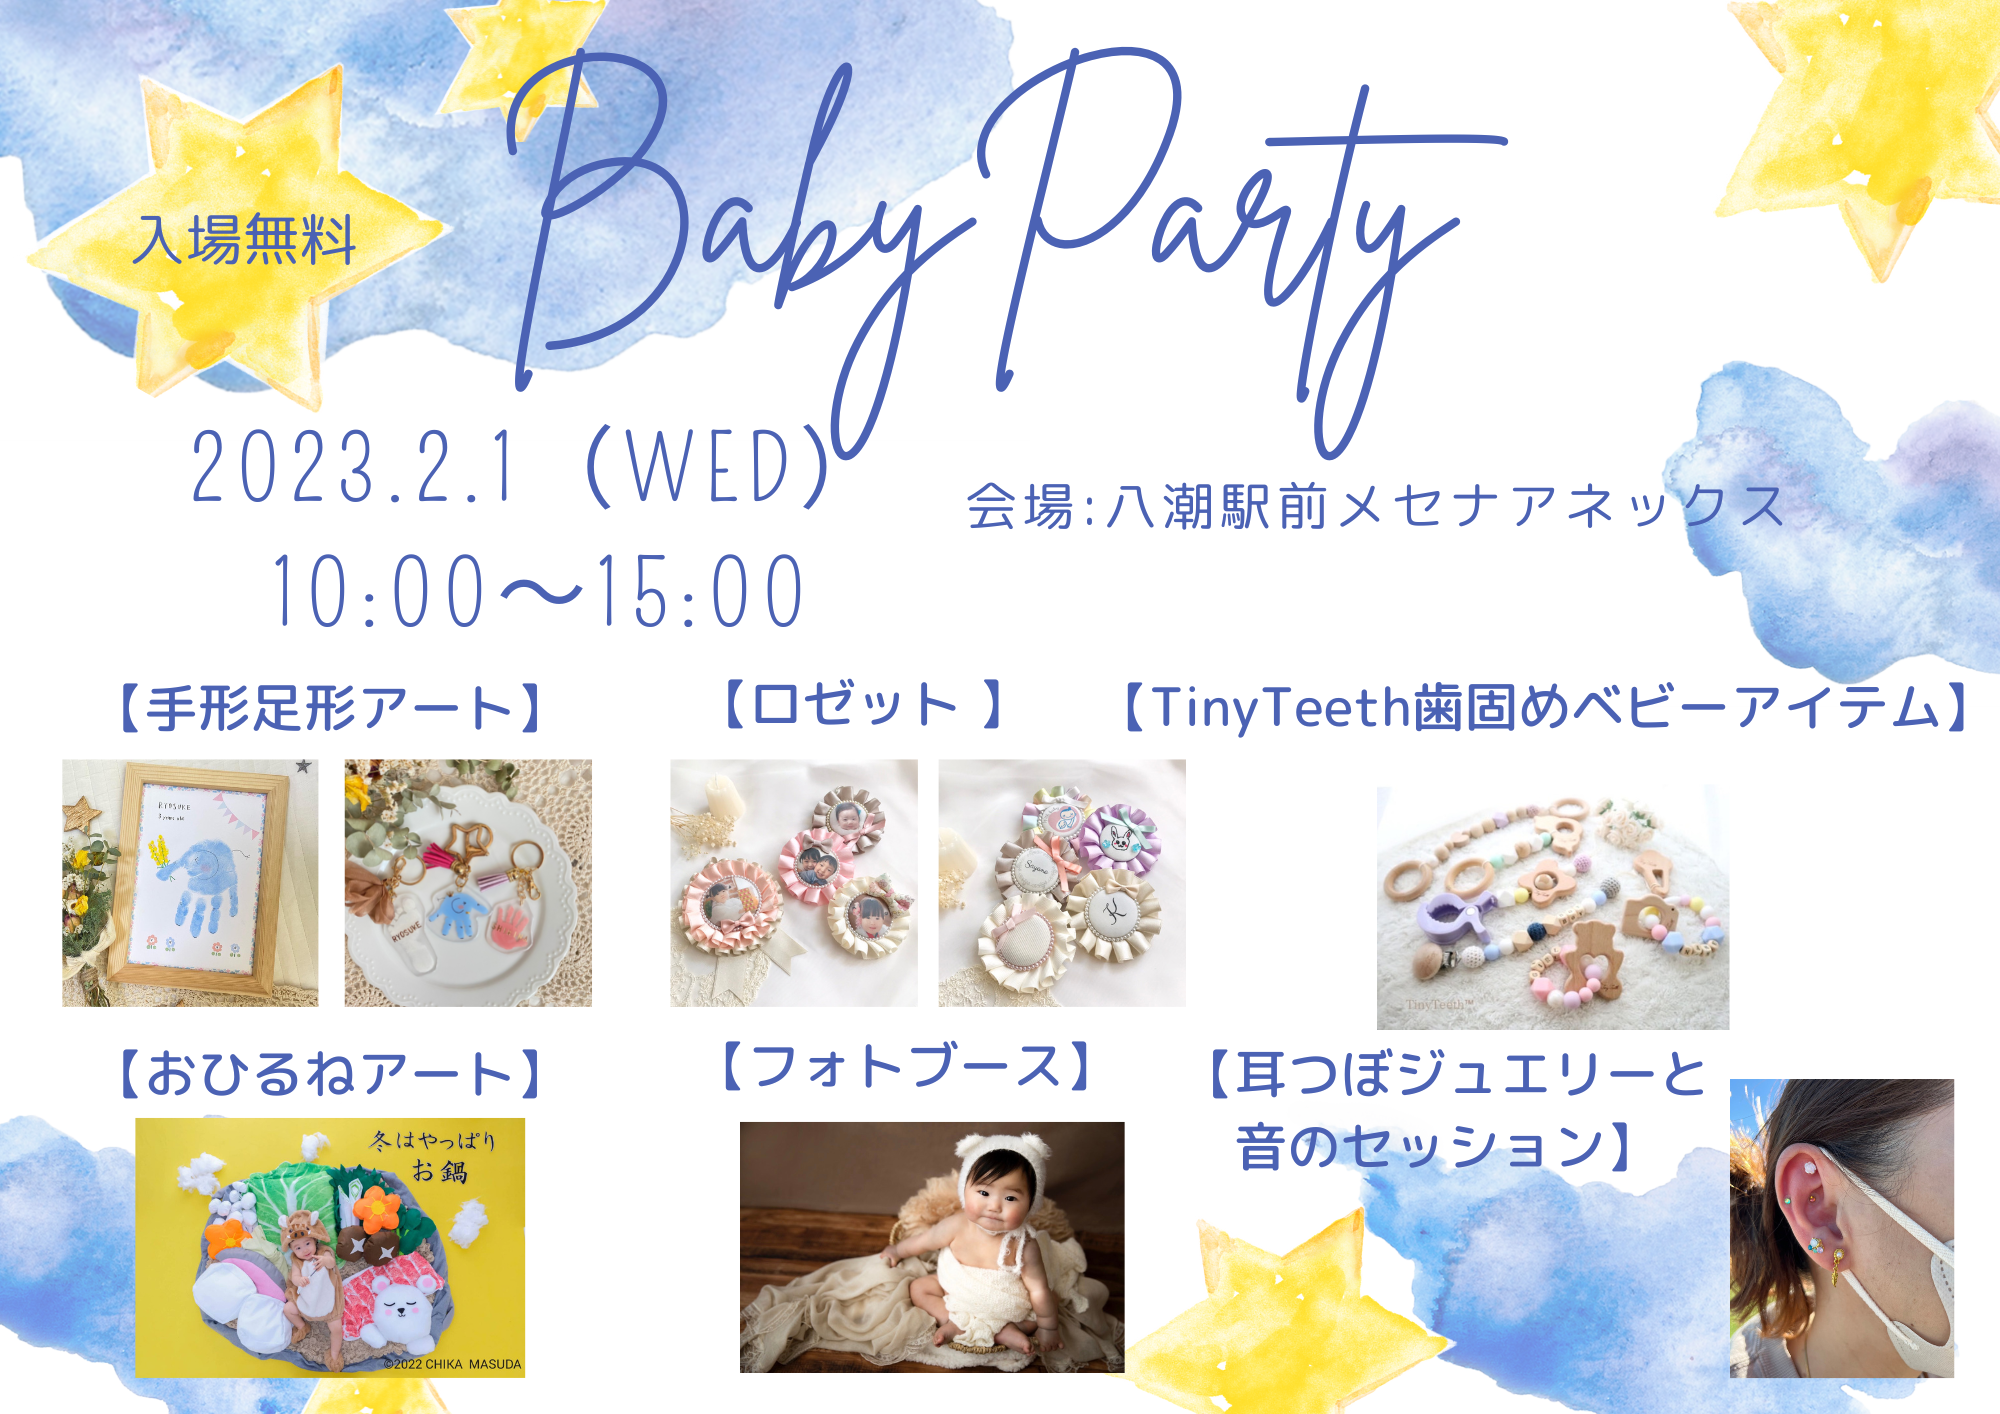 [BabyParty]手形足形アートやロゼット制作などのイベント開催